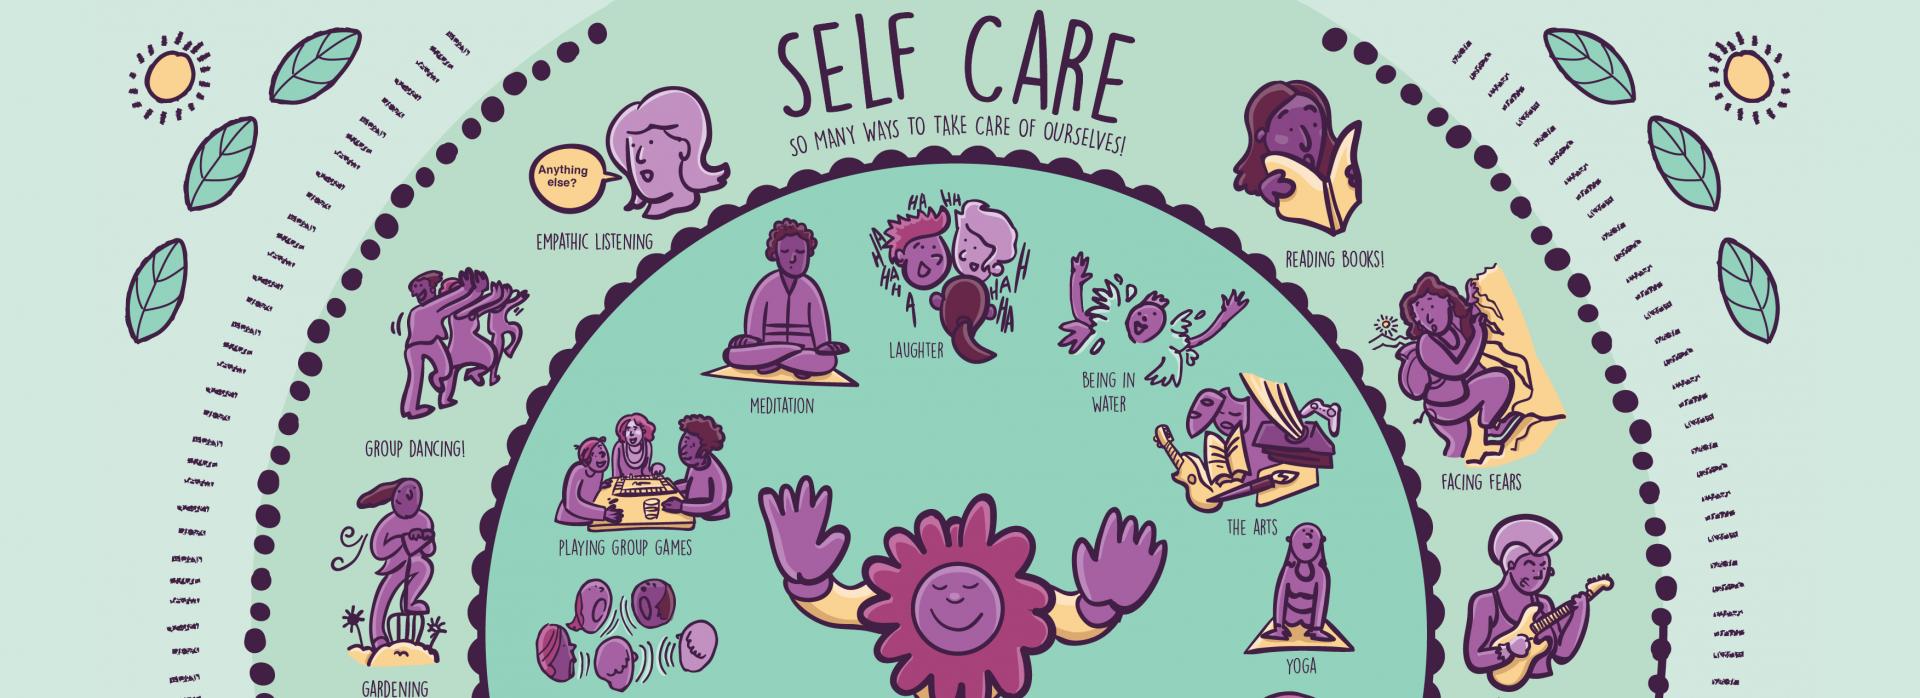 Illustration demonstrating self care strategies